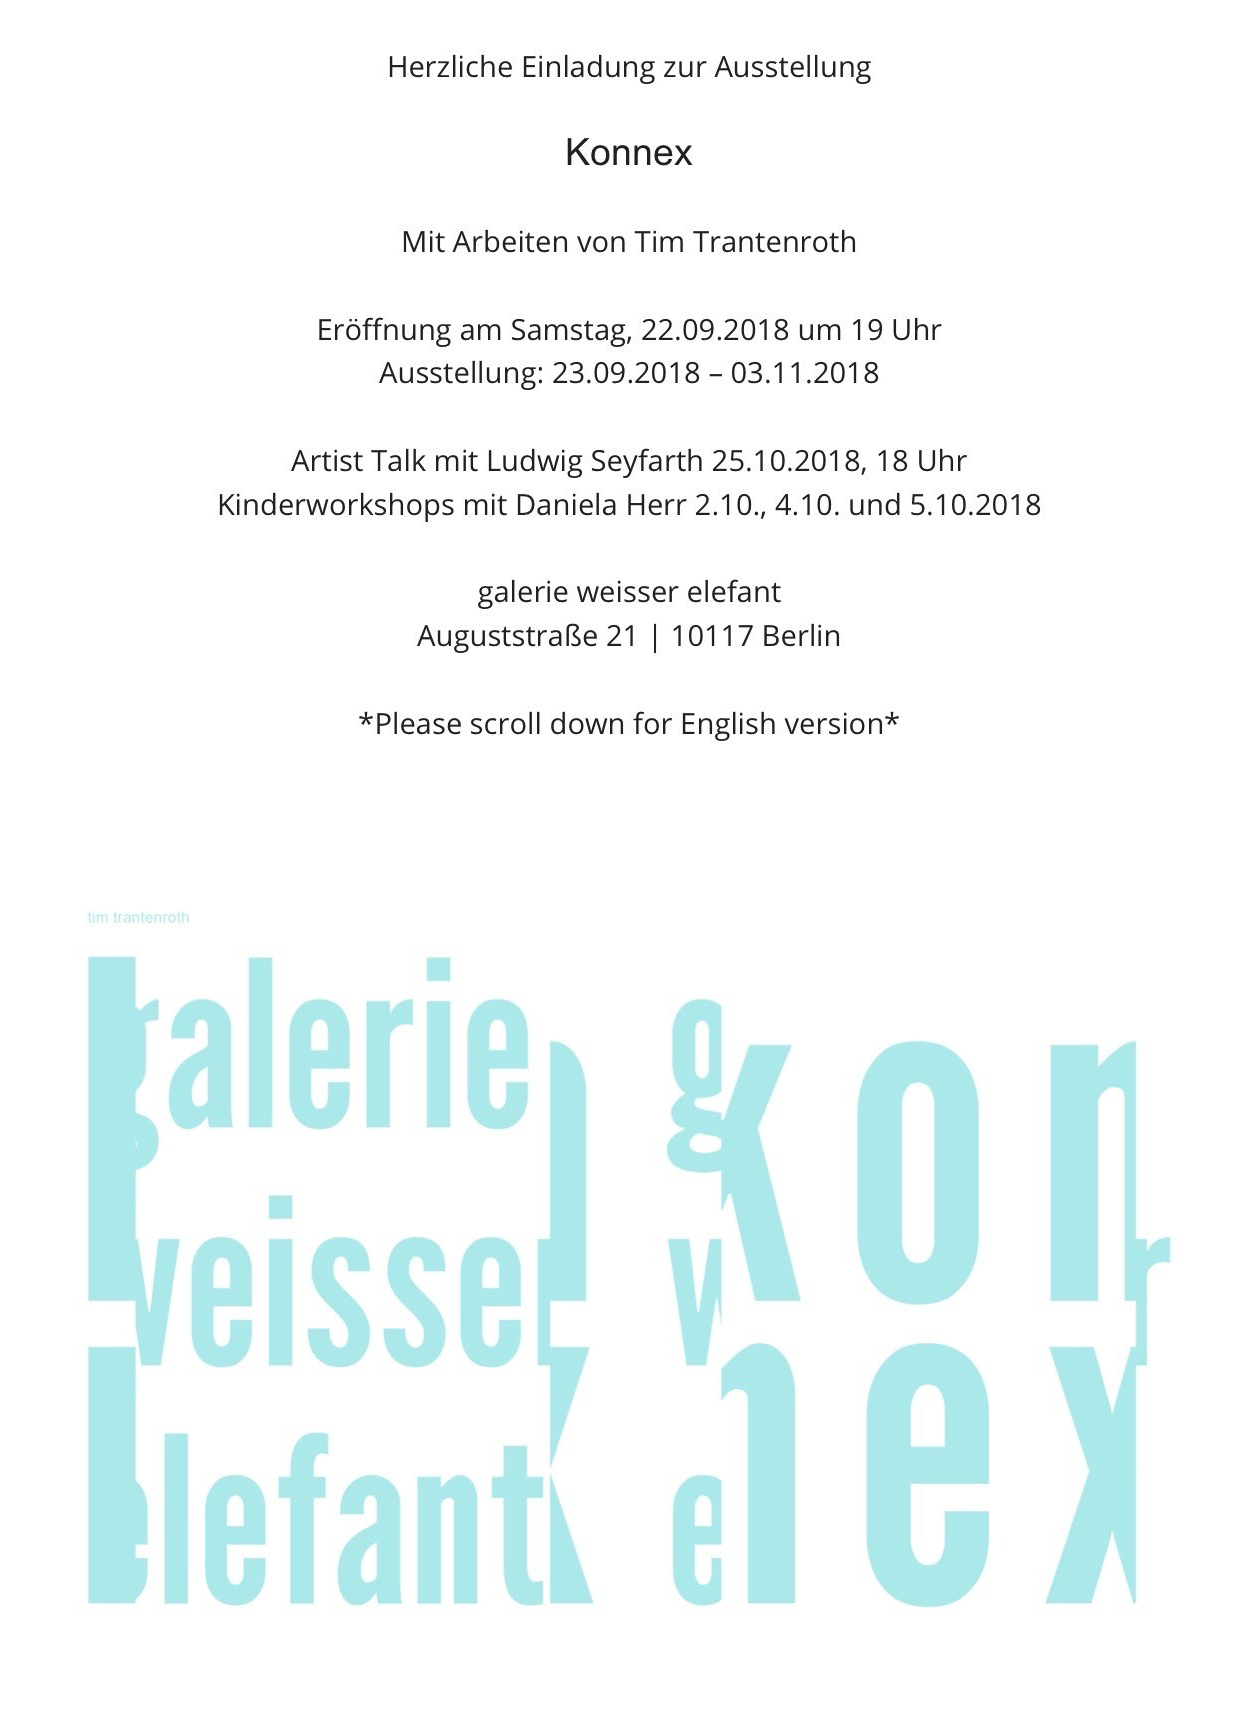 Einladung: Ausstellungseröffnung Konnex mit Tim Trantenroth| Sa, 22.09.18 um 19 Uhr